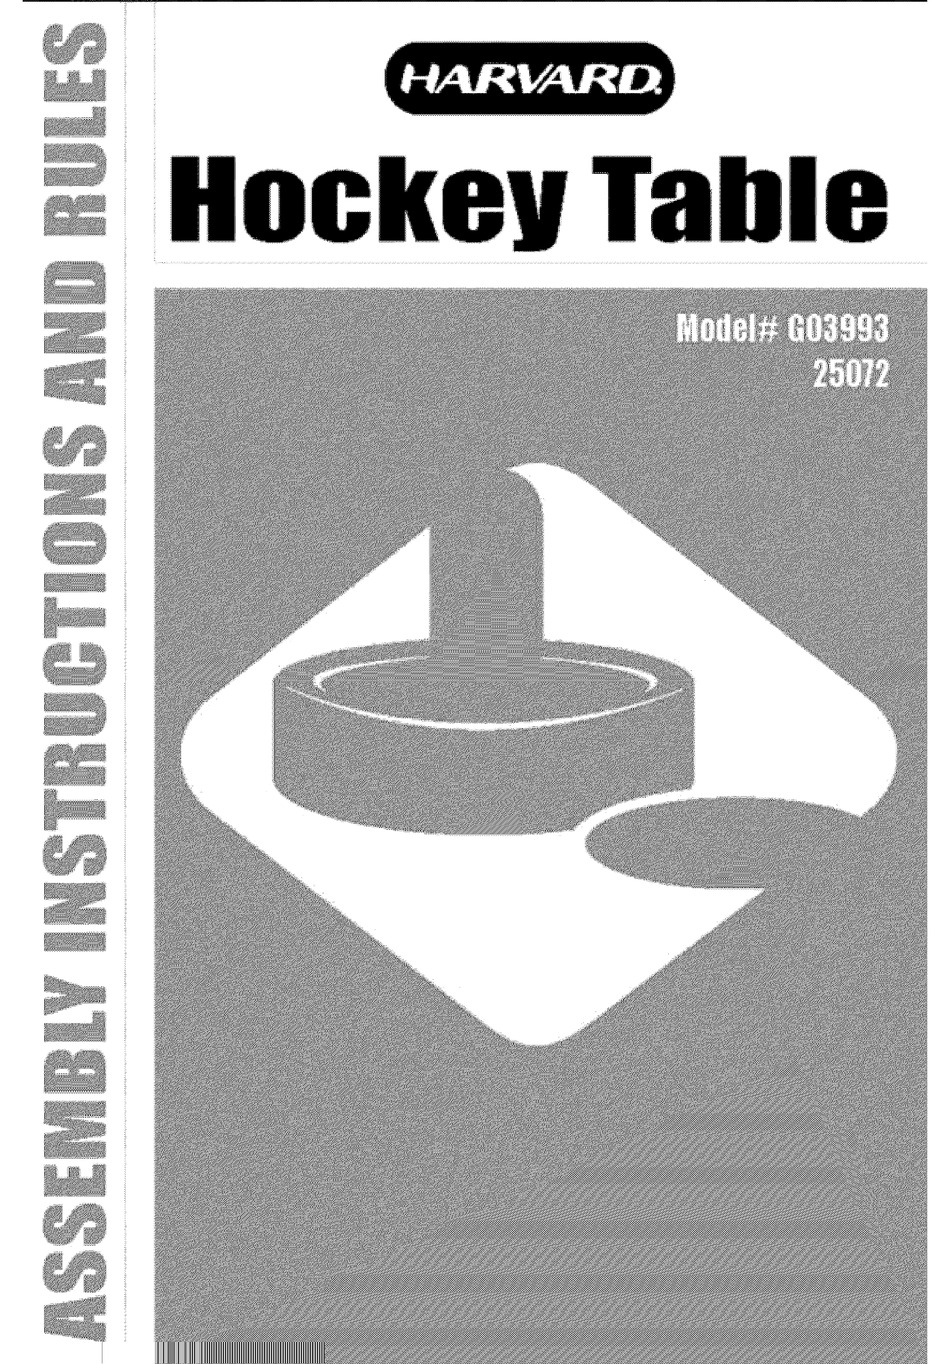 harvard air hockey table owners manual